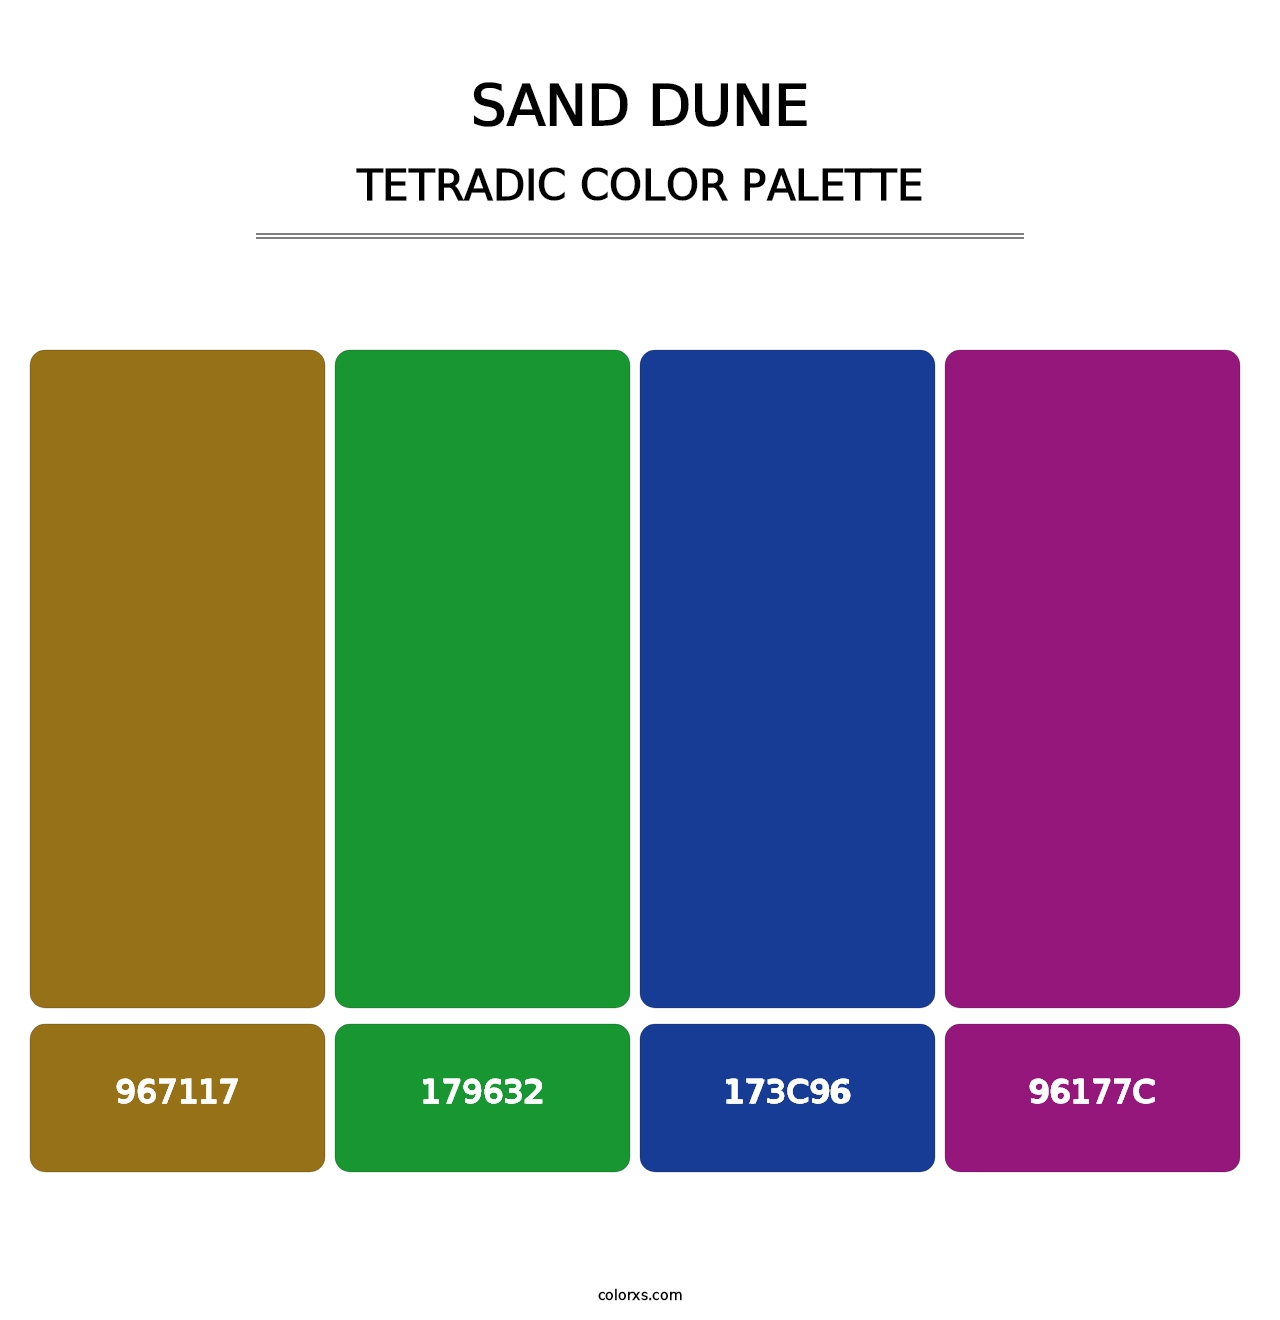 Sand Dune - Tetradic Color Palette